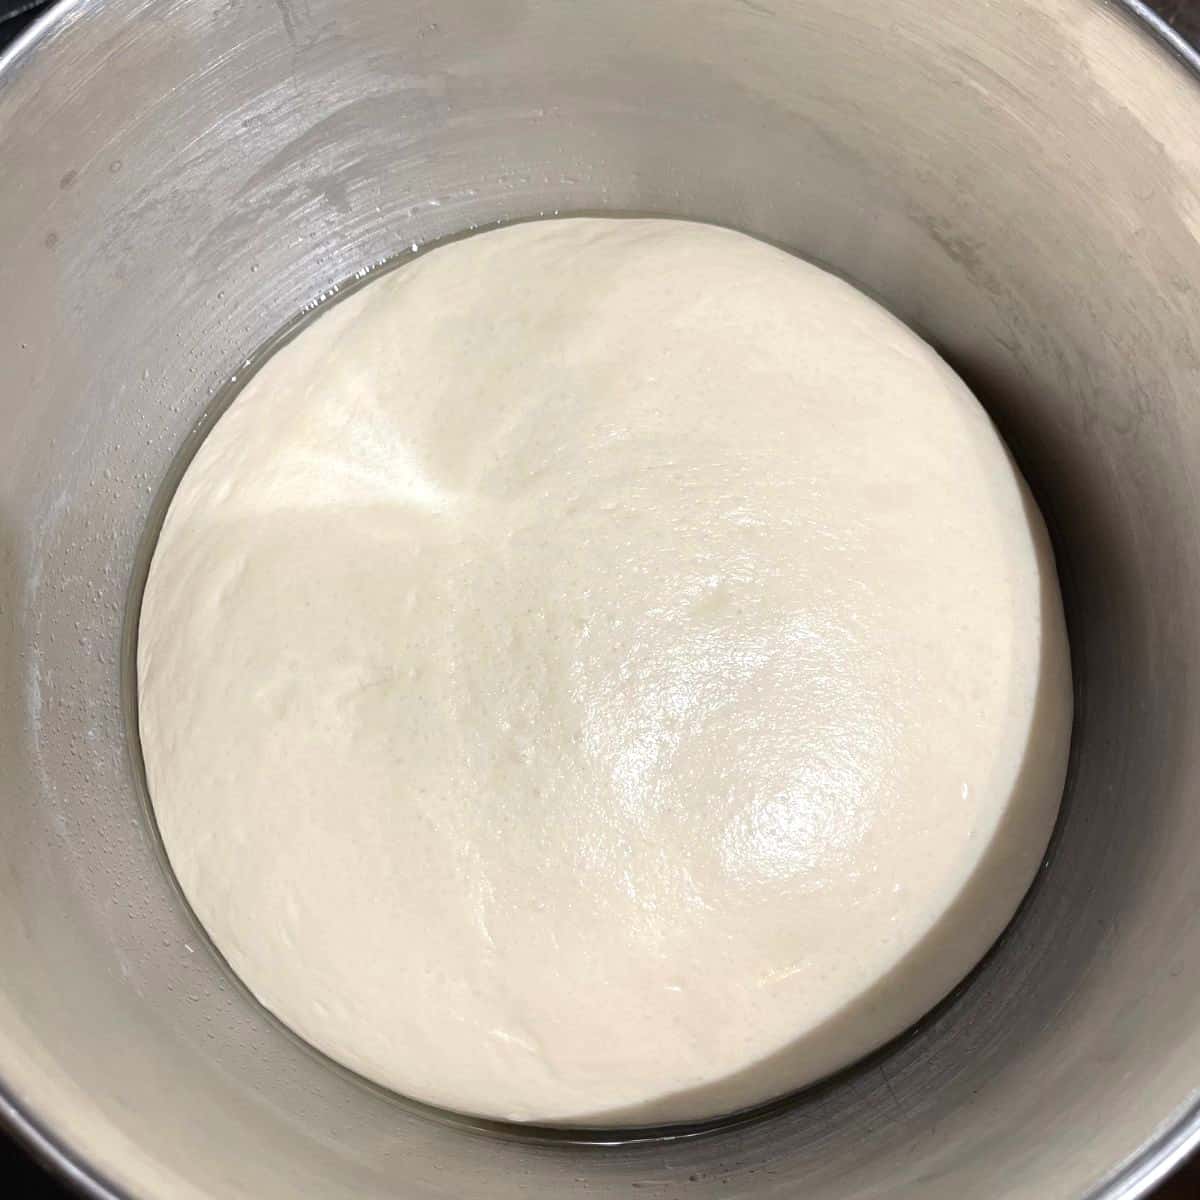 RIsen vegan challah dough in steel bowl.